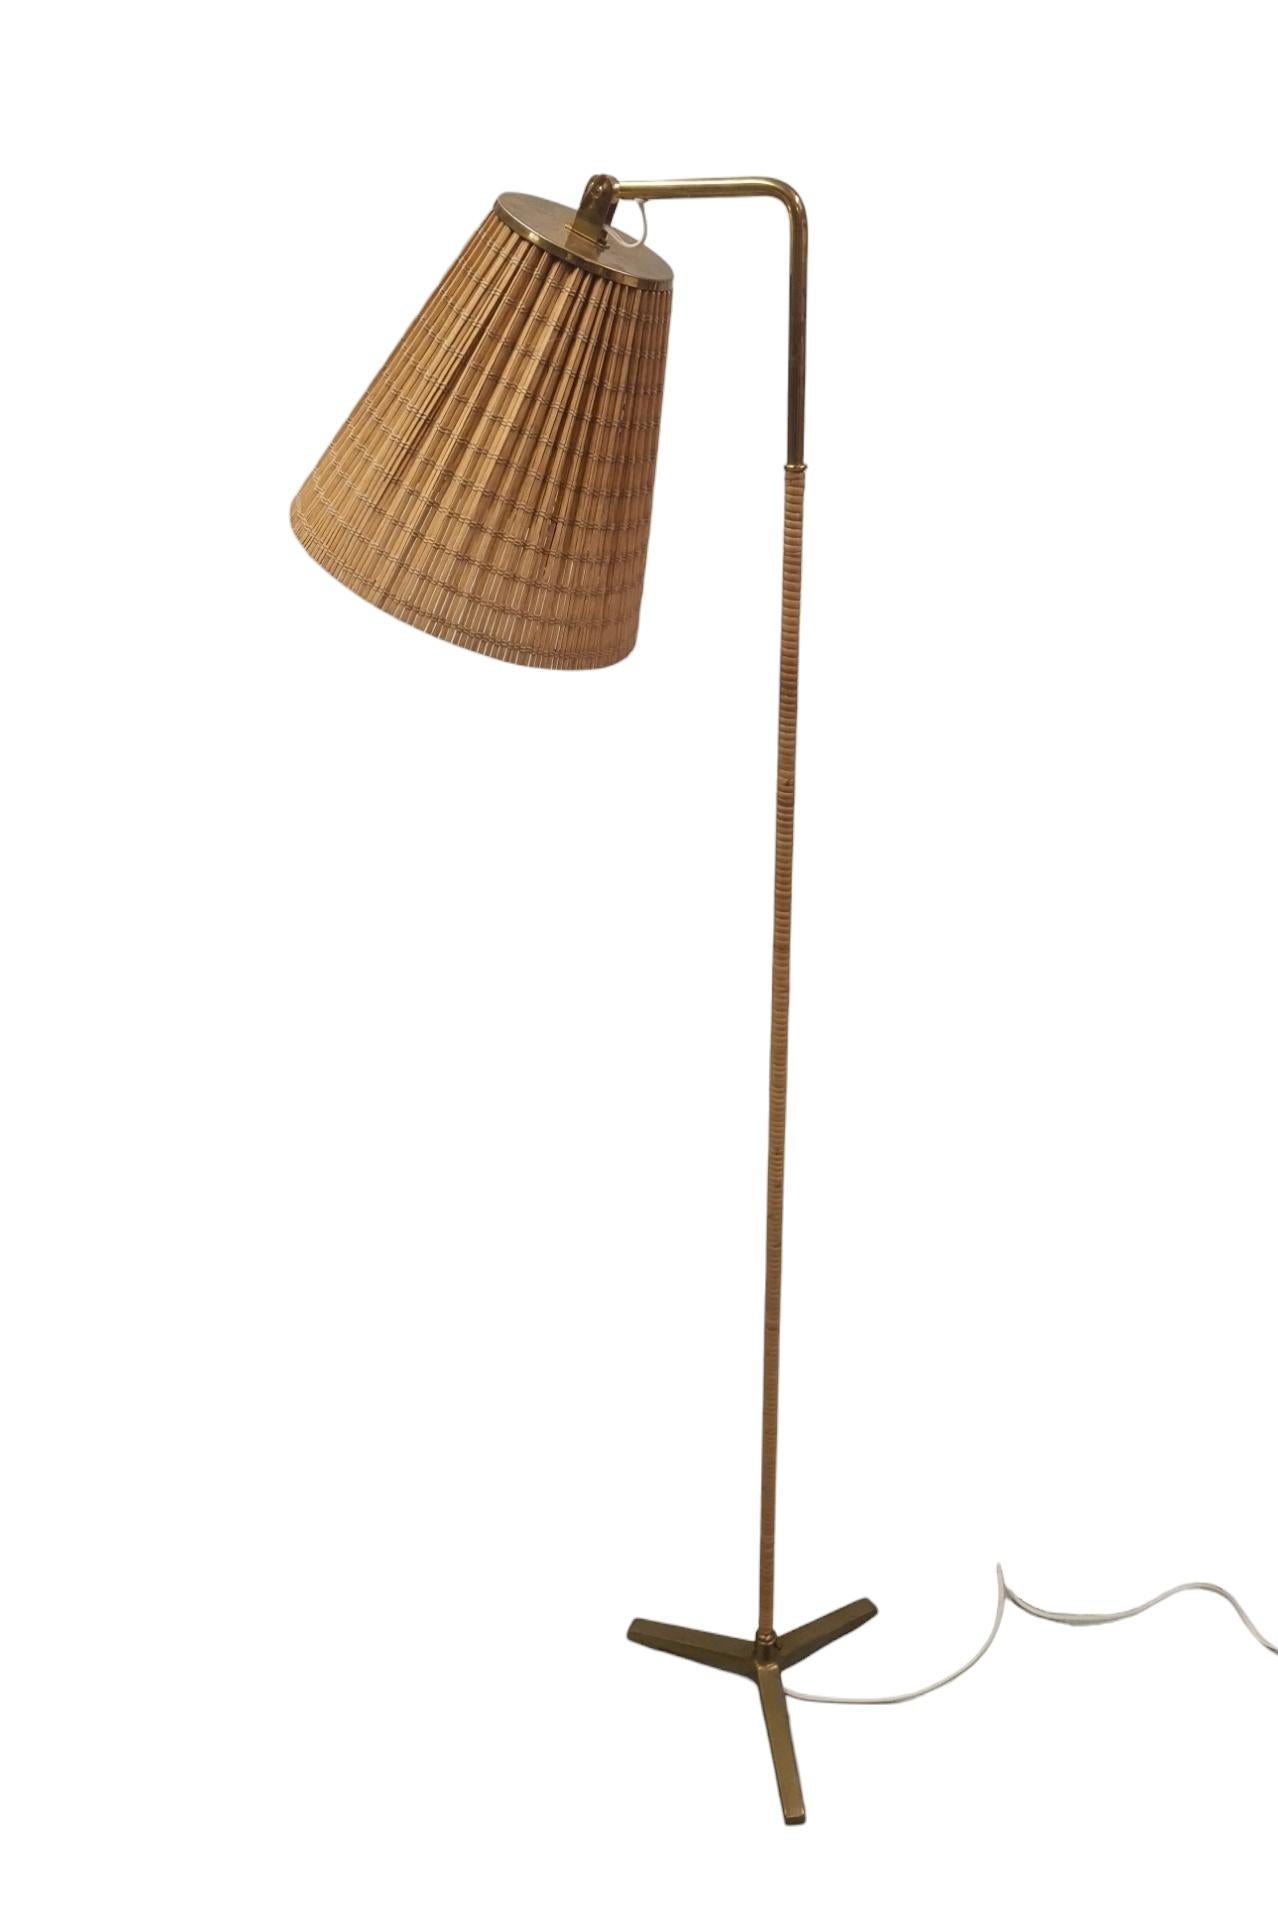 Paavo Tynell Floor Lamp Model 9631, Taito Oy 1